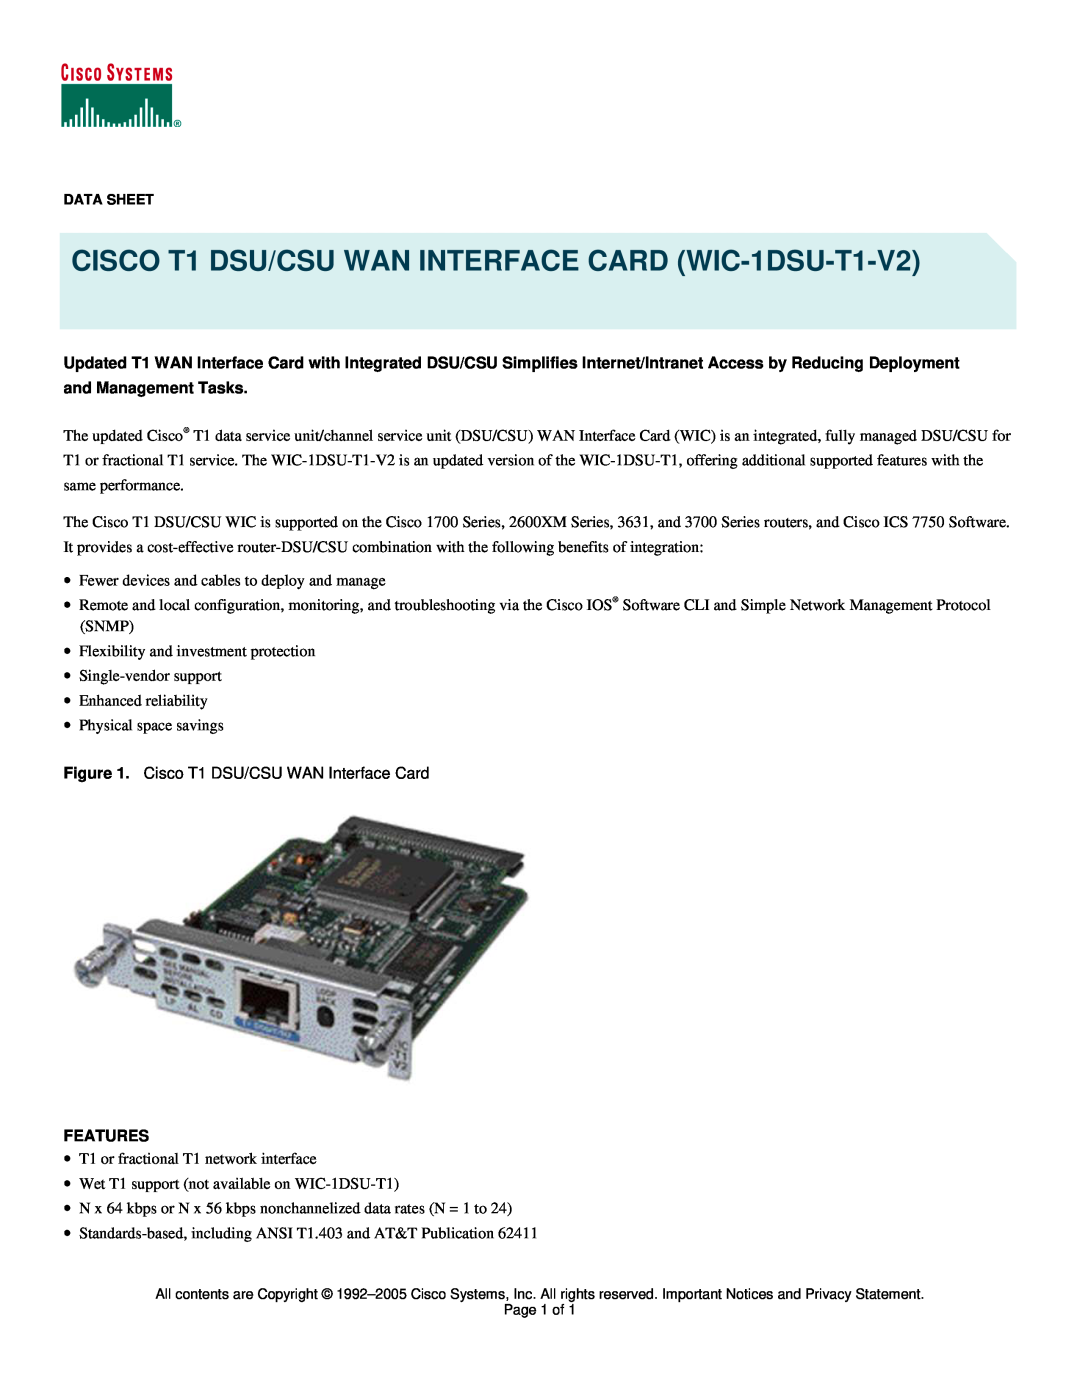 Cisco Systems manual and Management Tasks, Features, CISCO T1 DSU/CSU WAN INTERFACE CARD WIC-1DSU-T1-V2 